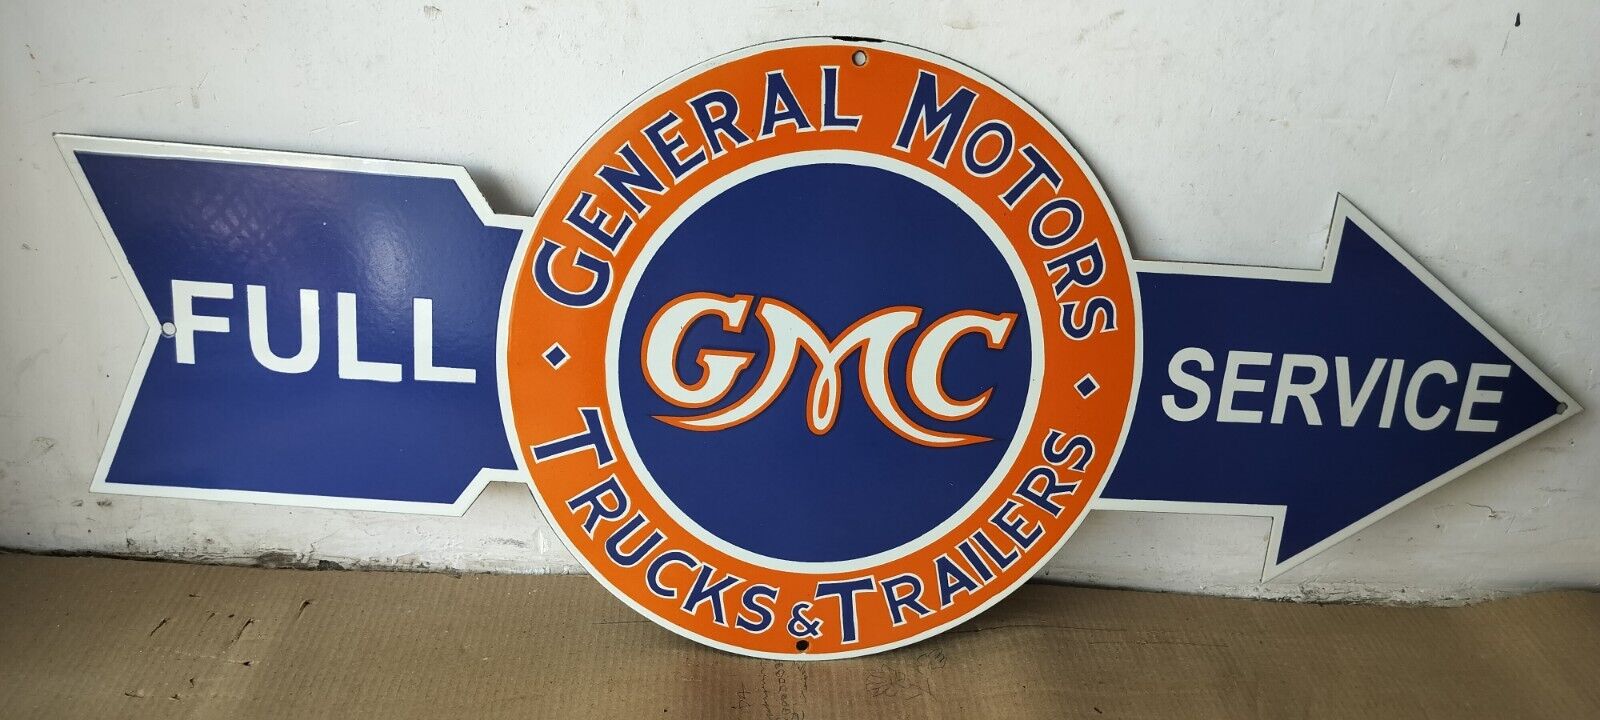 Gmc General Motors Trucks trailers  Porcelain Enamel Sign  40 x 16.5 Inches